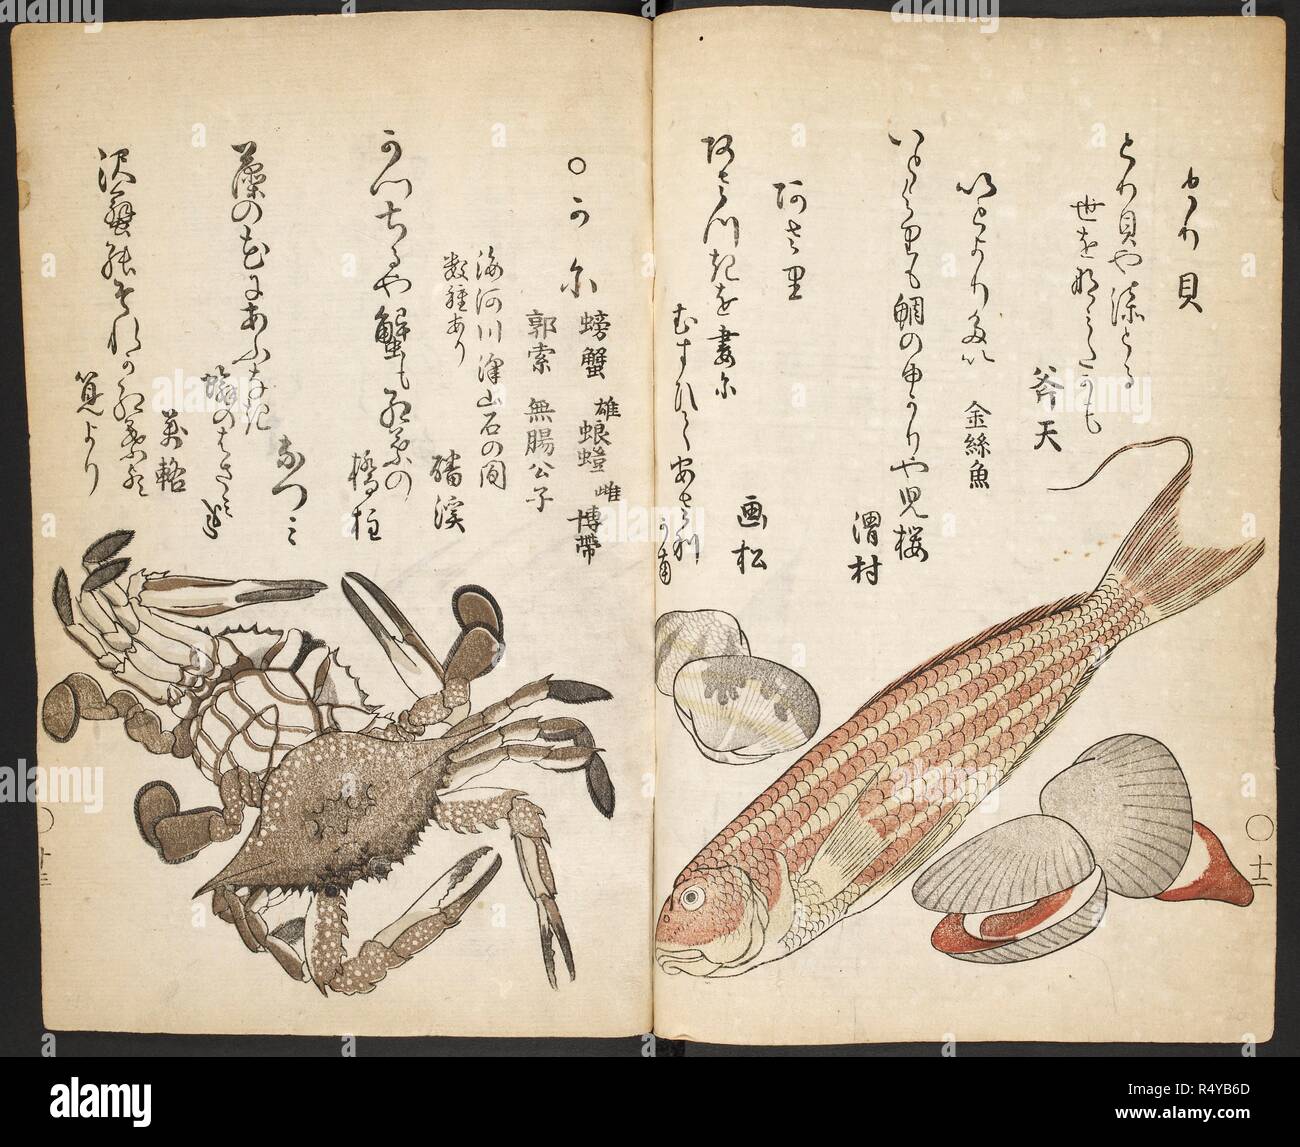 Fish, shell fish and crabs. Umi no sachi [The Bounty of the Sea]. Edo [Tokyo], Japan, 1778 (original edition 1762). Fish, shell fish and crabs  Image taken from Umi no sachi (The Bounty of the Sea)  Published in Edo [Tokyo], Japan, 1778 (original edition 1762). . Source: 16116.d.17. Language: Japanese. Author: KATSUMA RYUSAI. Stock Photo